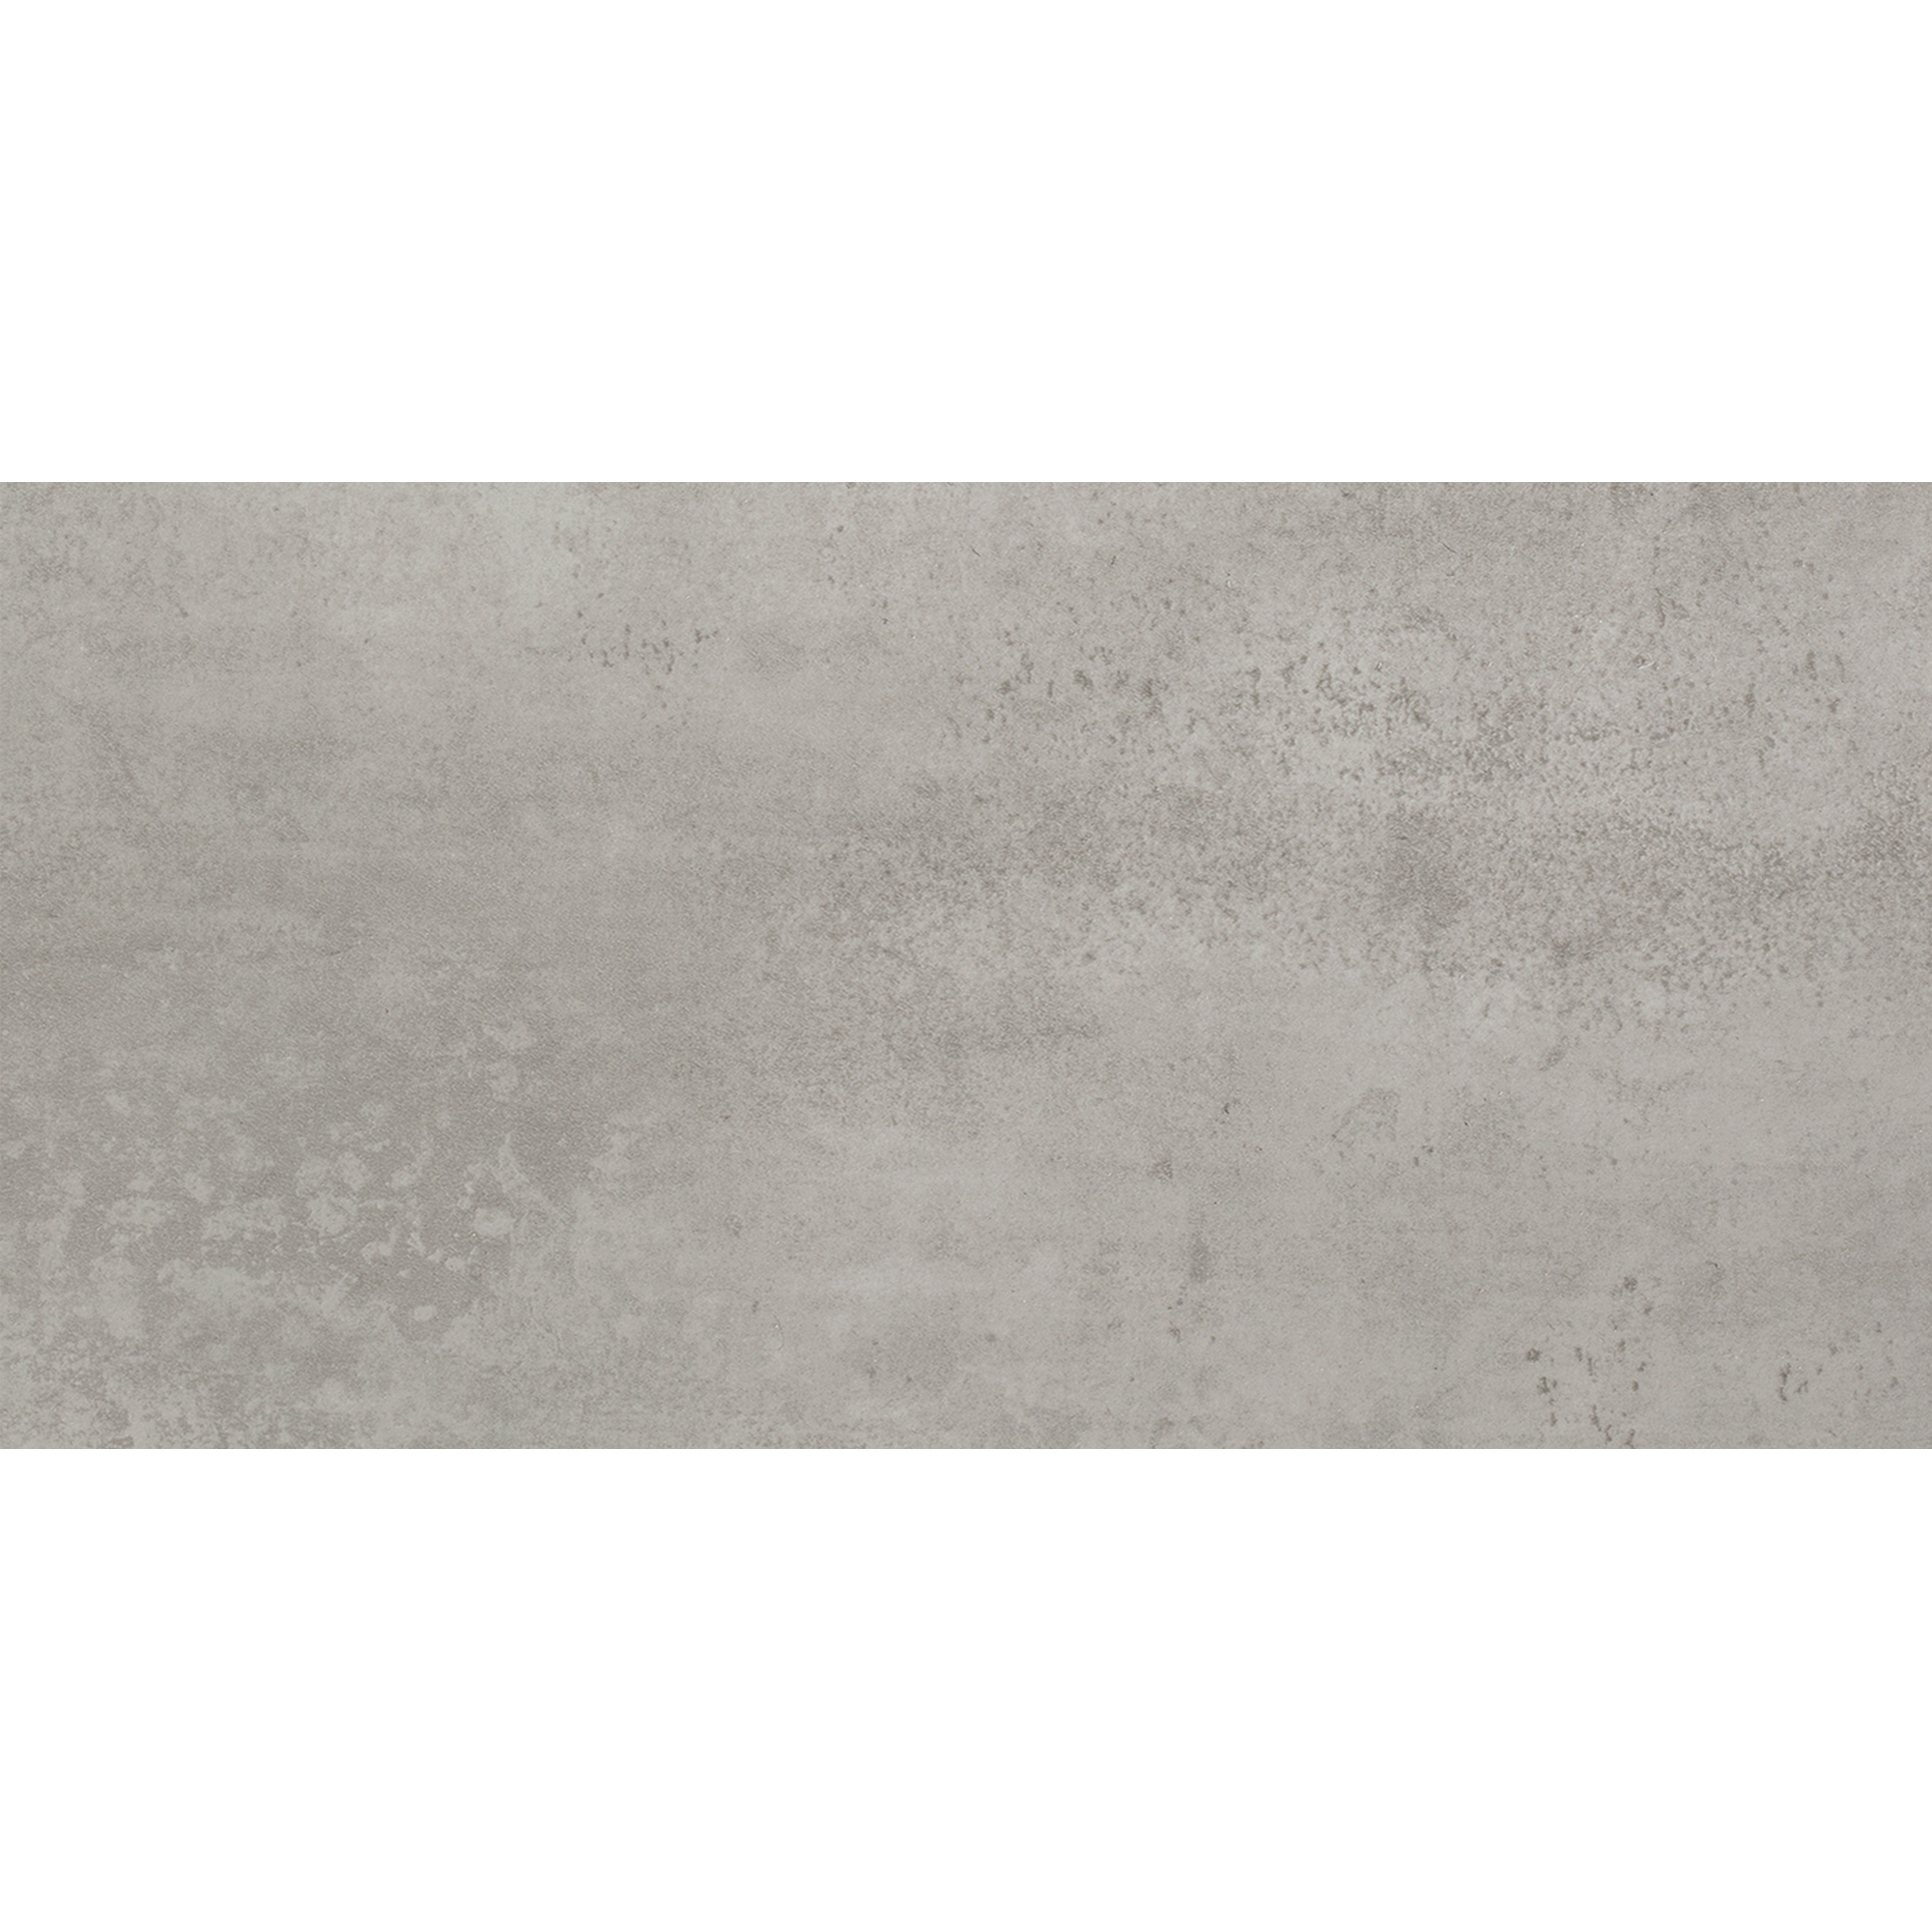 Bodenfliese 'Island' Feinsteinzeug grau 30 x 60 cm + product picture